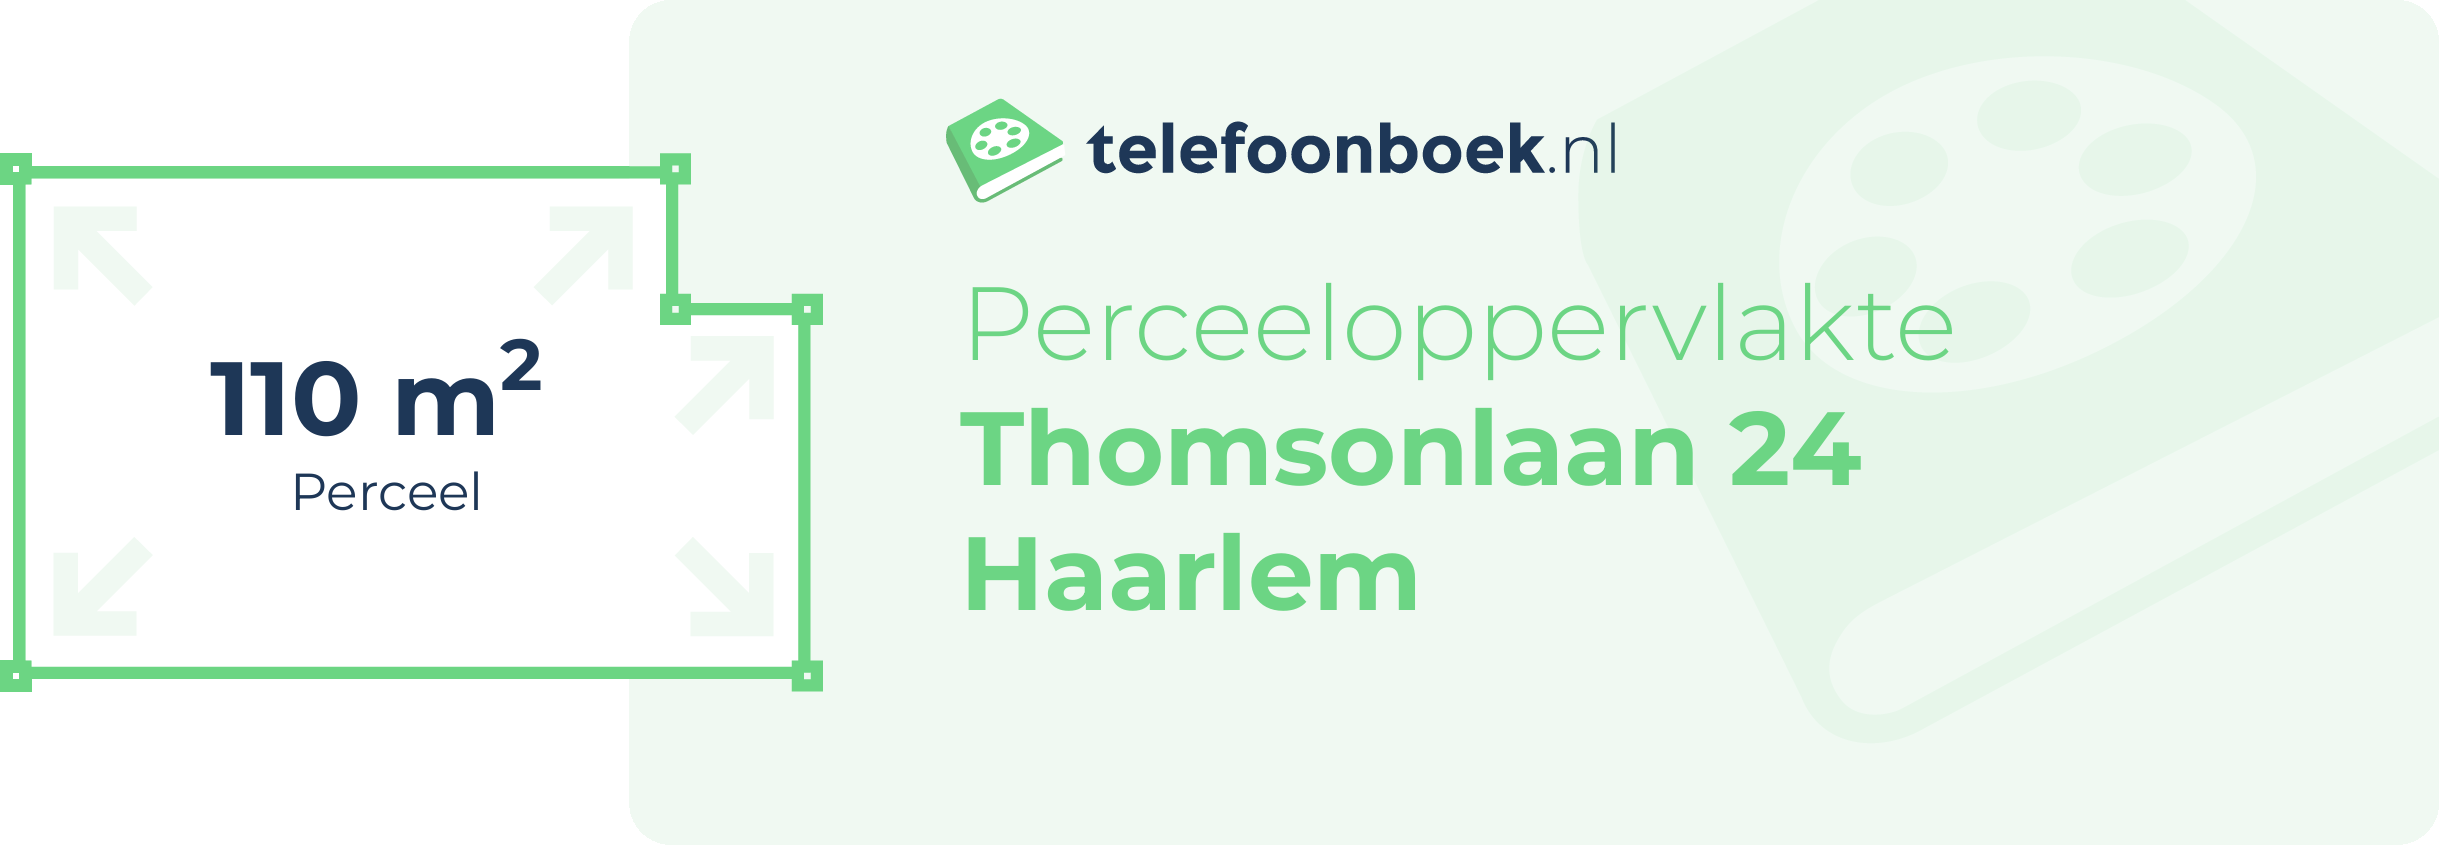 Perceeloppervlakte Thomsonlaan 24 Haarlem